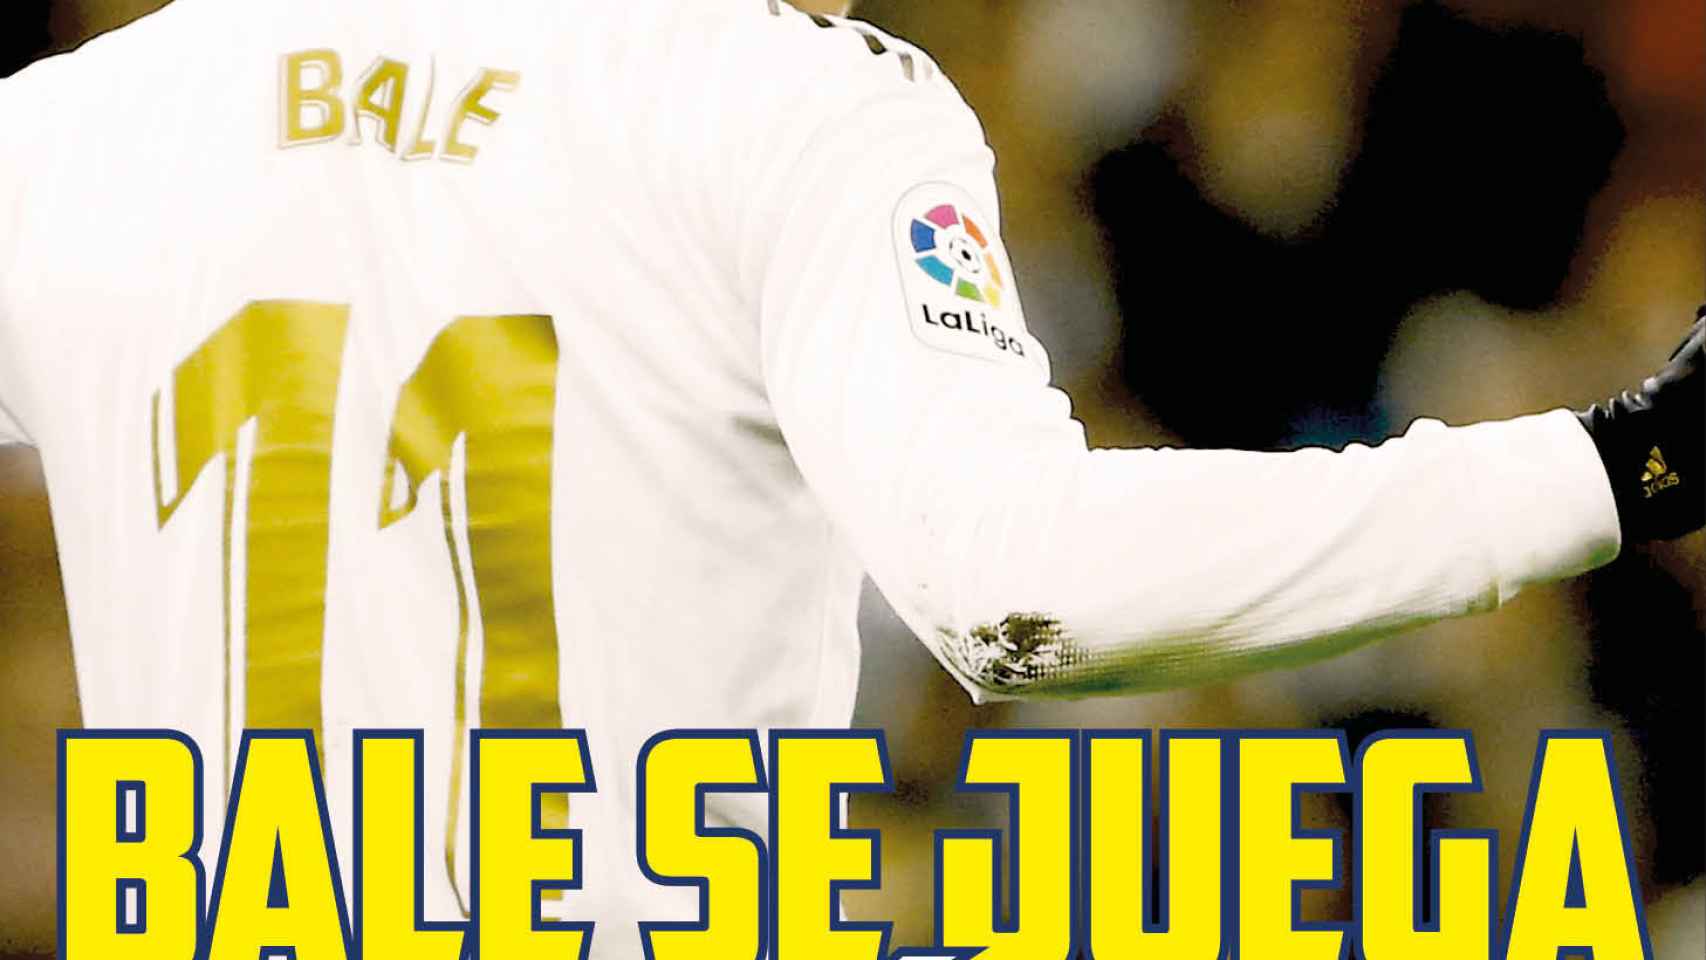 La portada de El Bernabéu (10/12/2019)